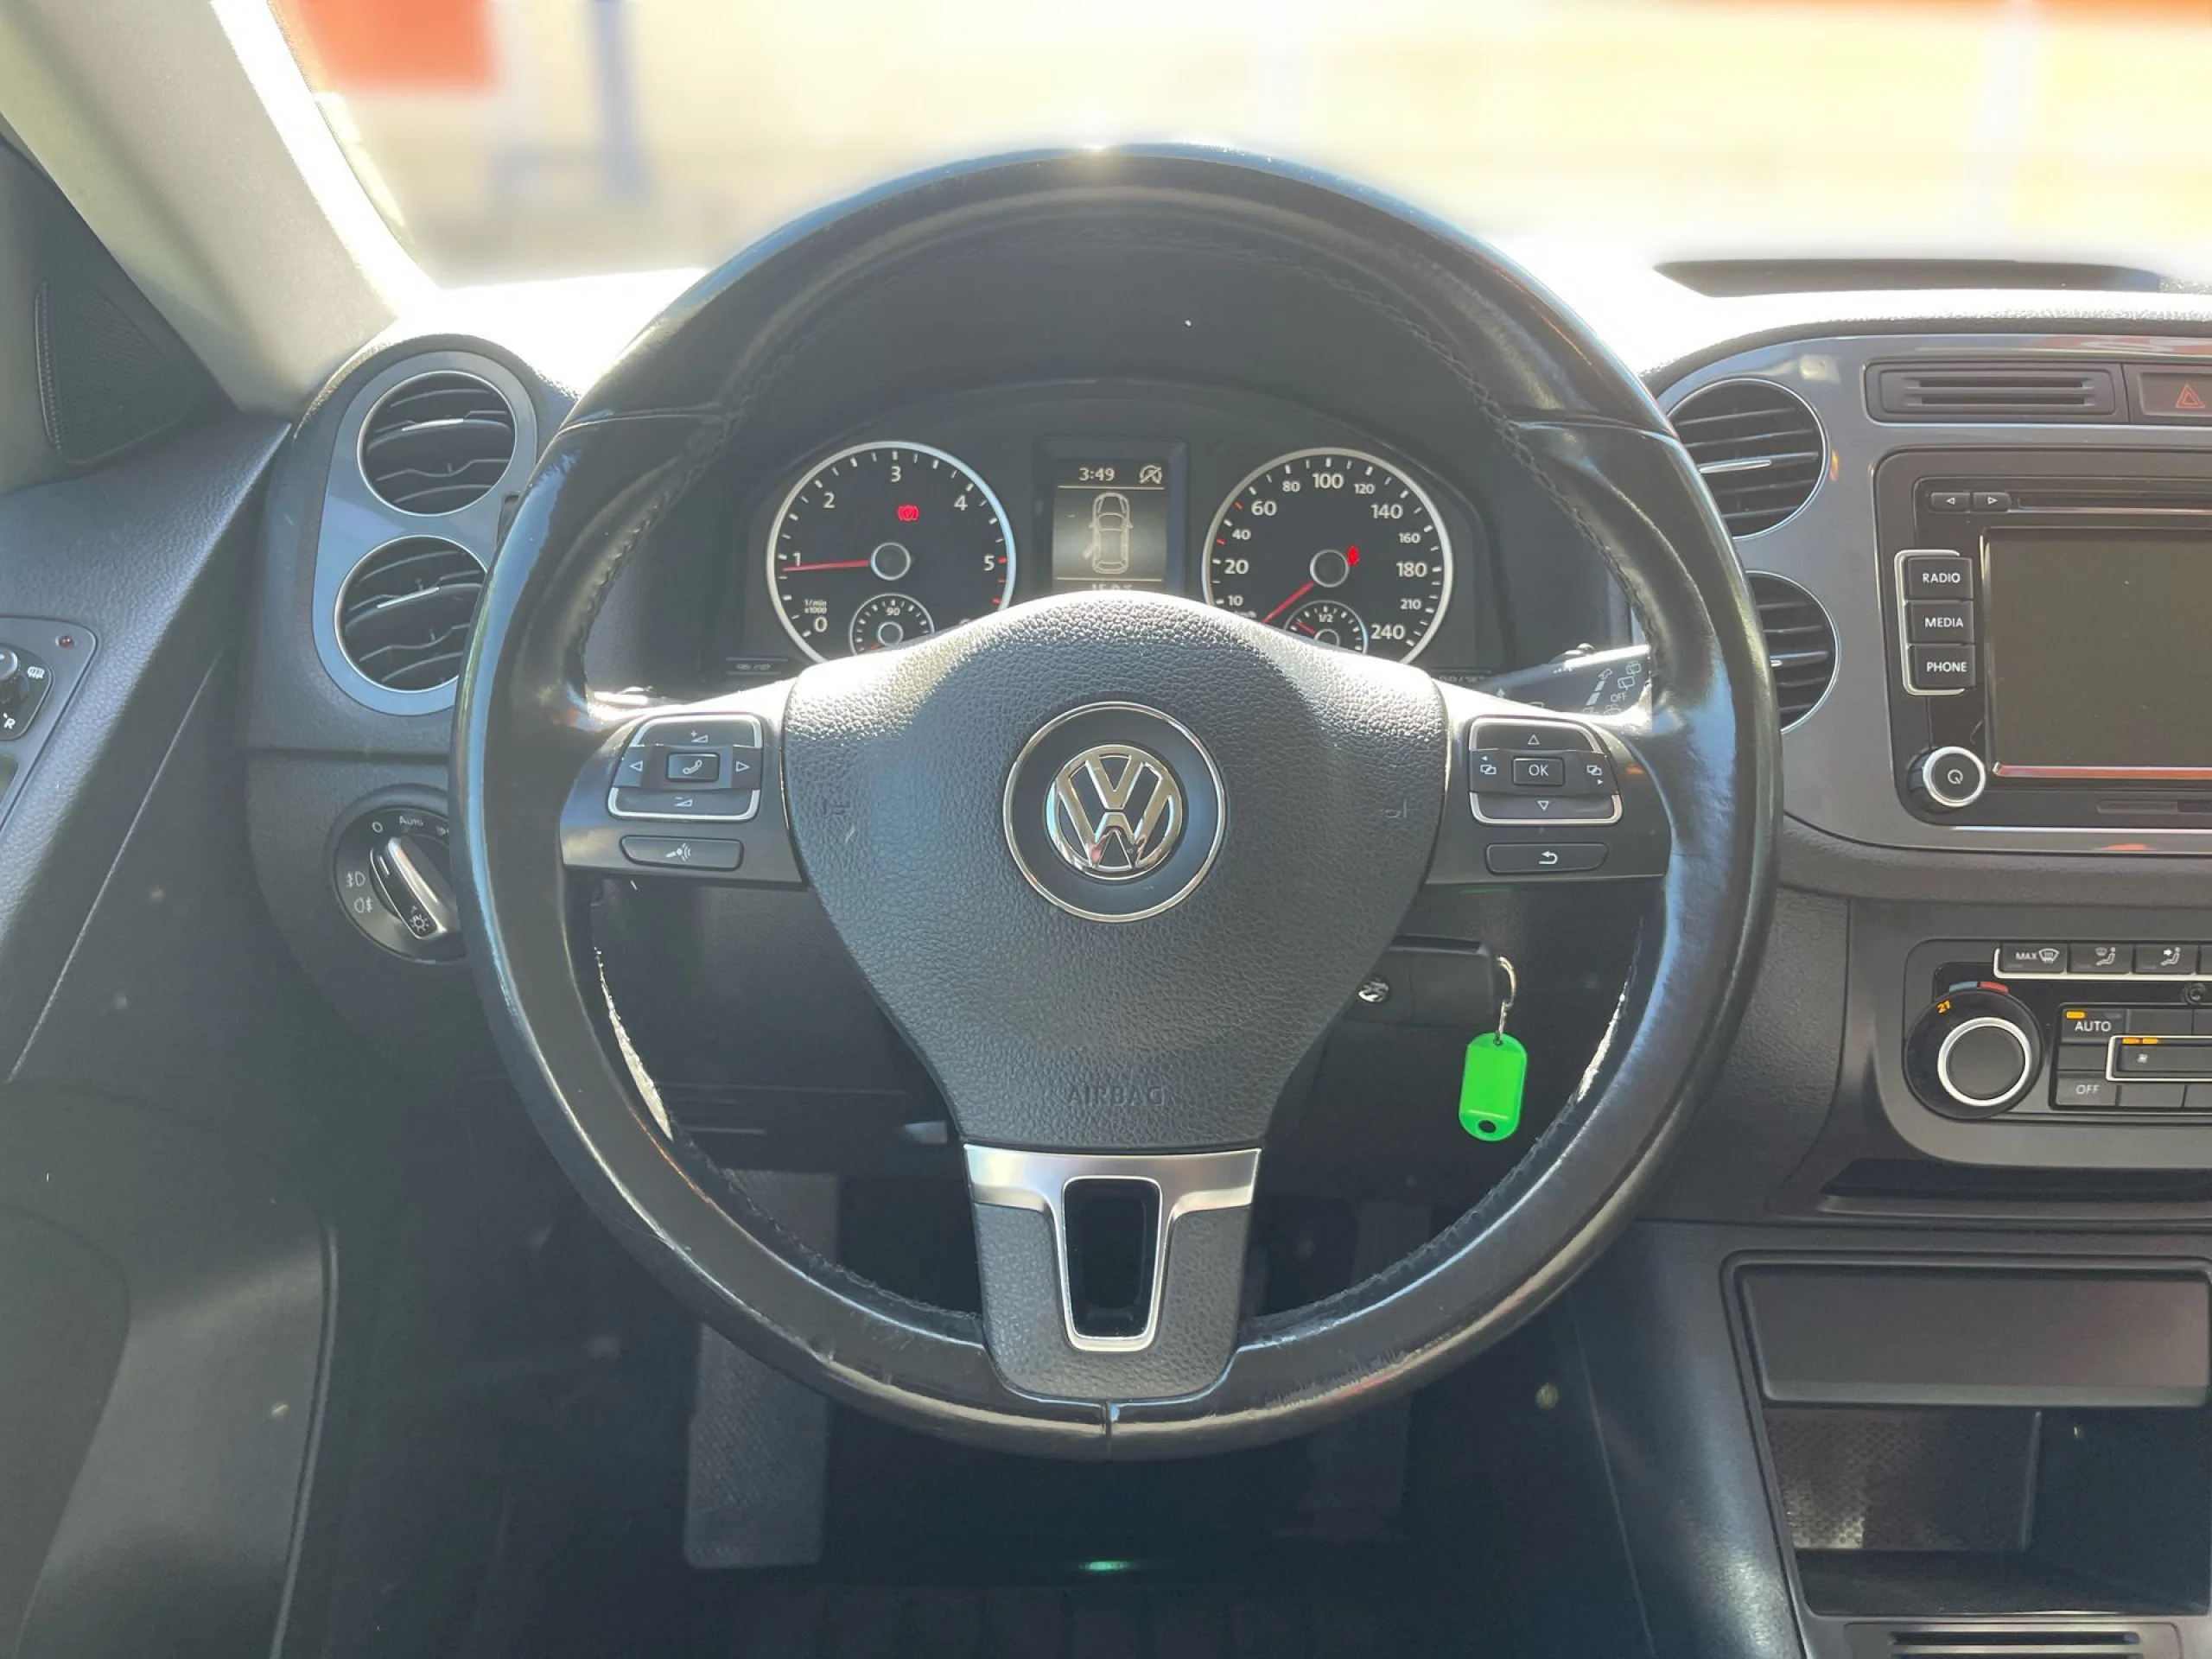 Volkswagen Tiguan T1 2.0 TDI BMT 4x2 103 kW (140 CV) - Foto 10